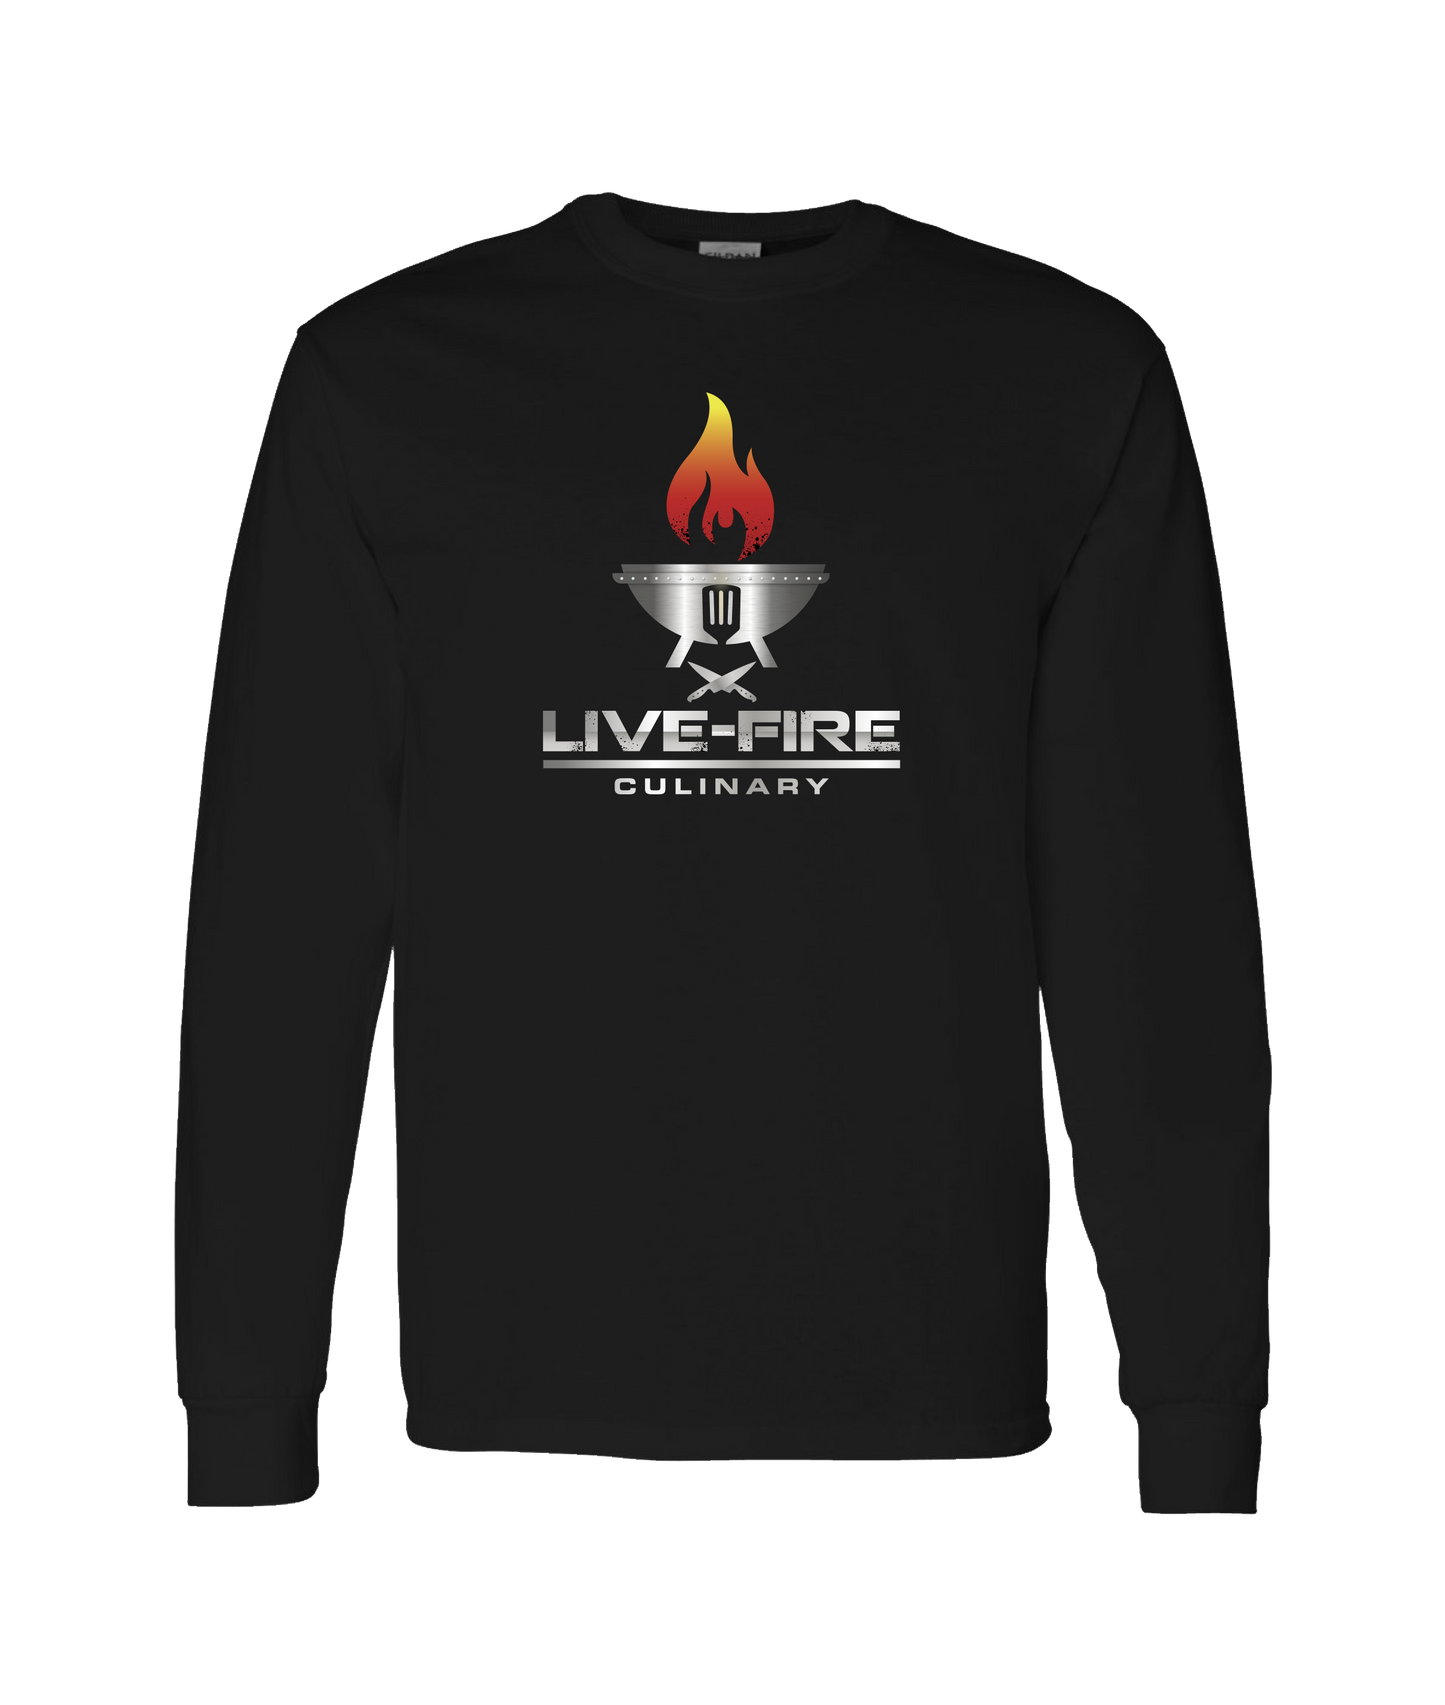 Live-Fire Culinary - Fire - Black Long Sleeve T